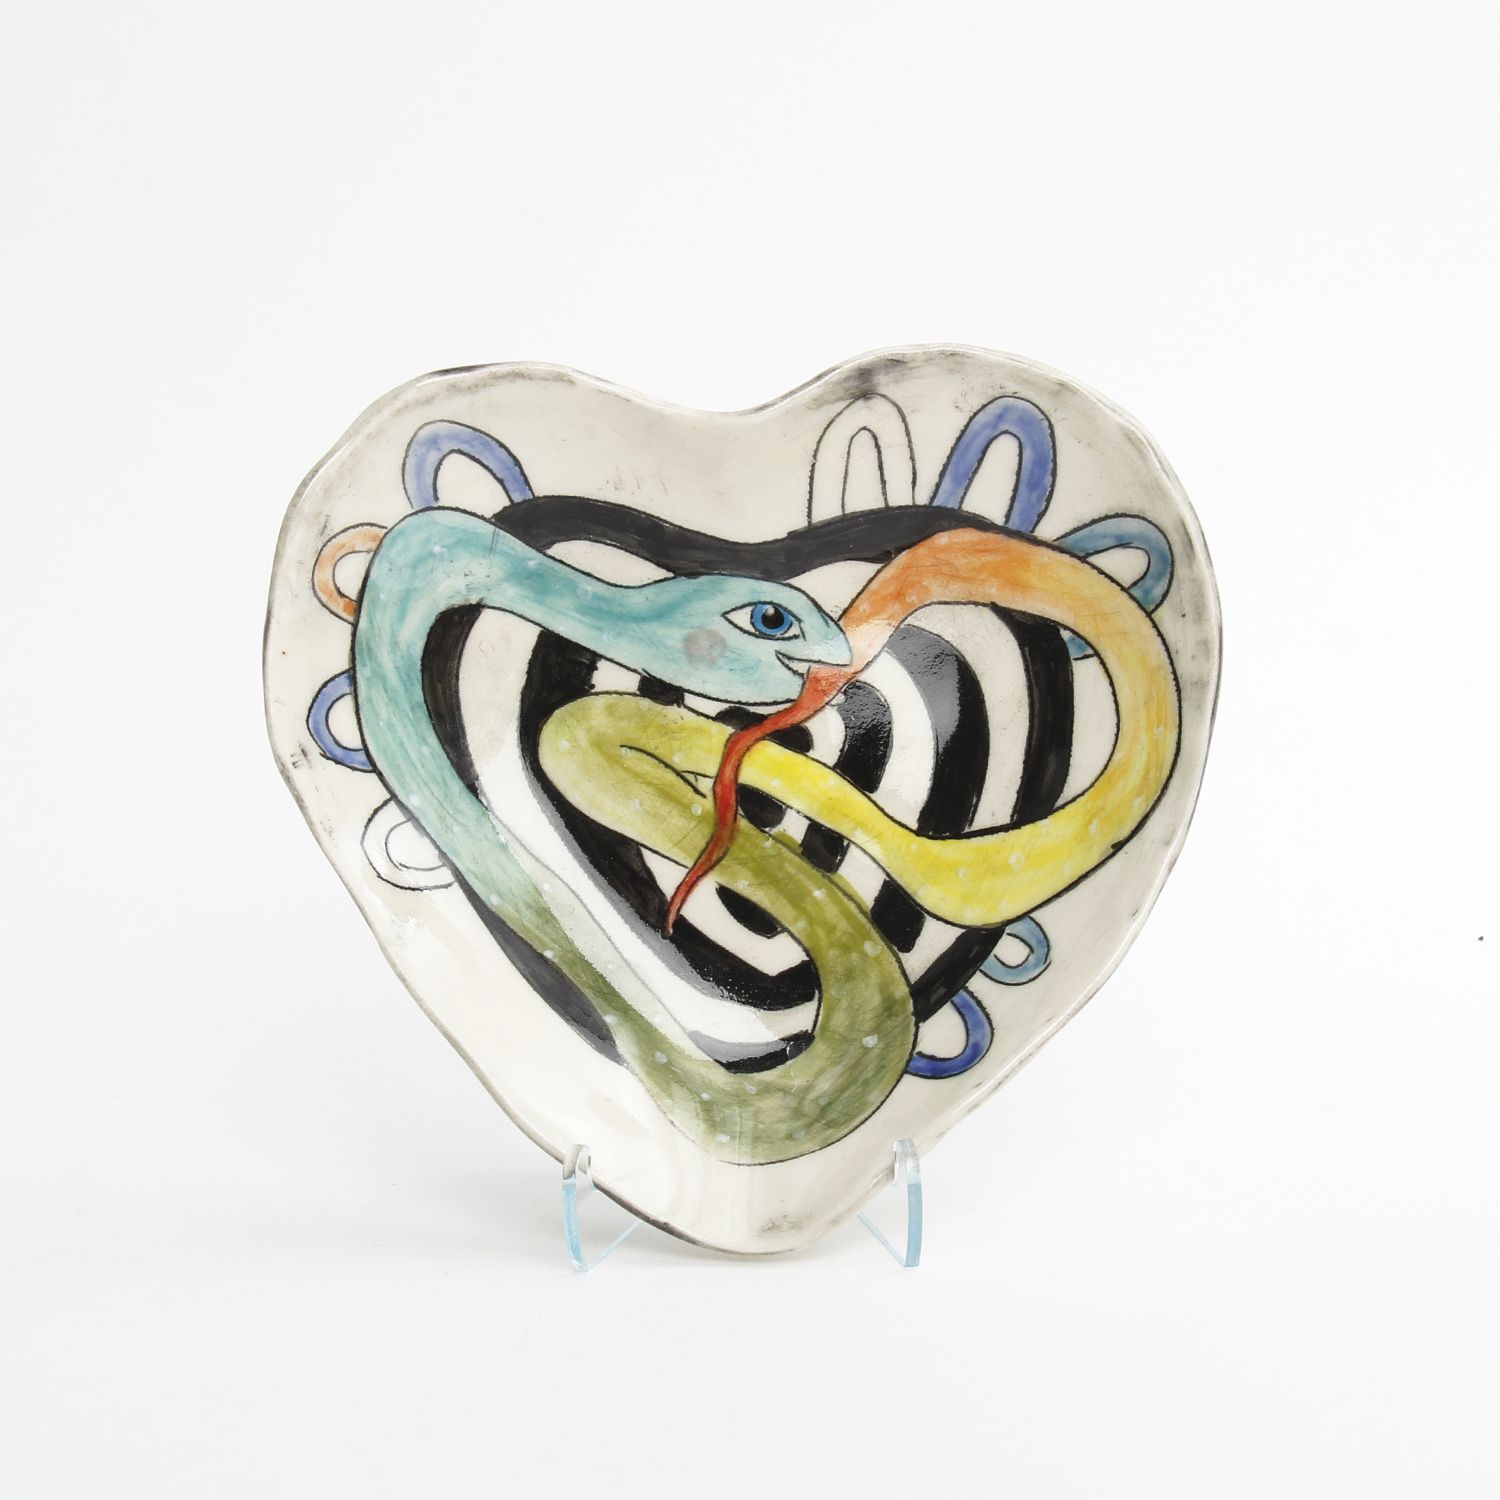 Eekta Trienekens: Heart Shaped Bowl Product Image 1 of 2